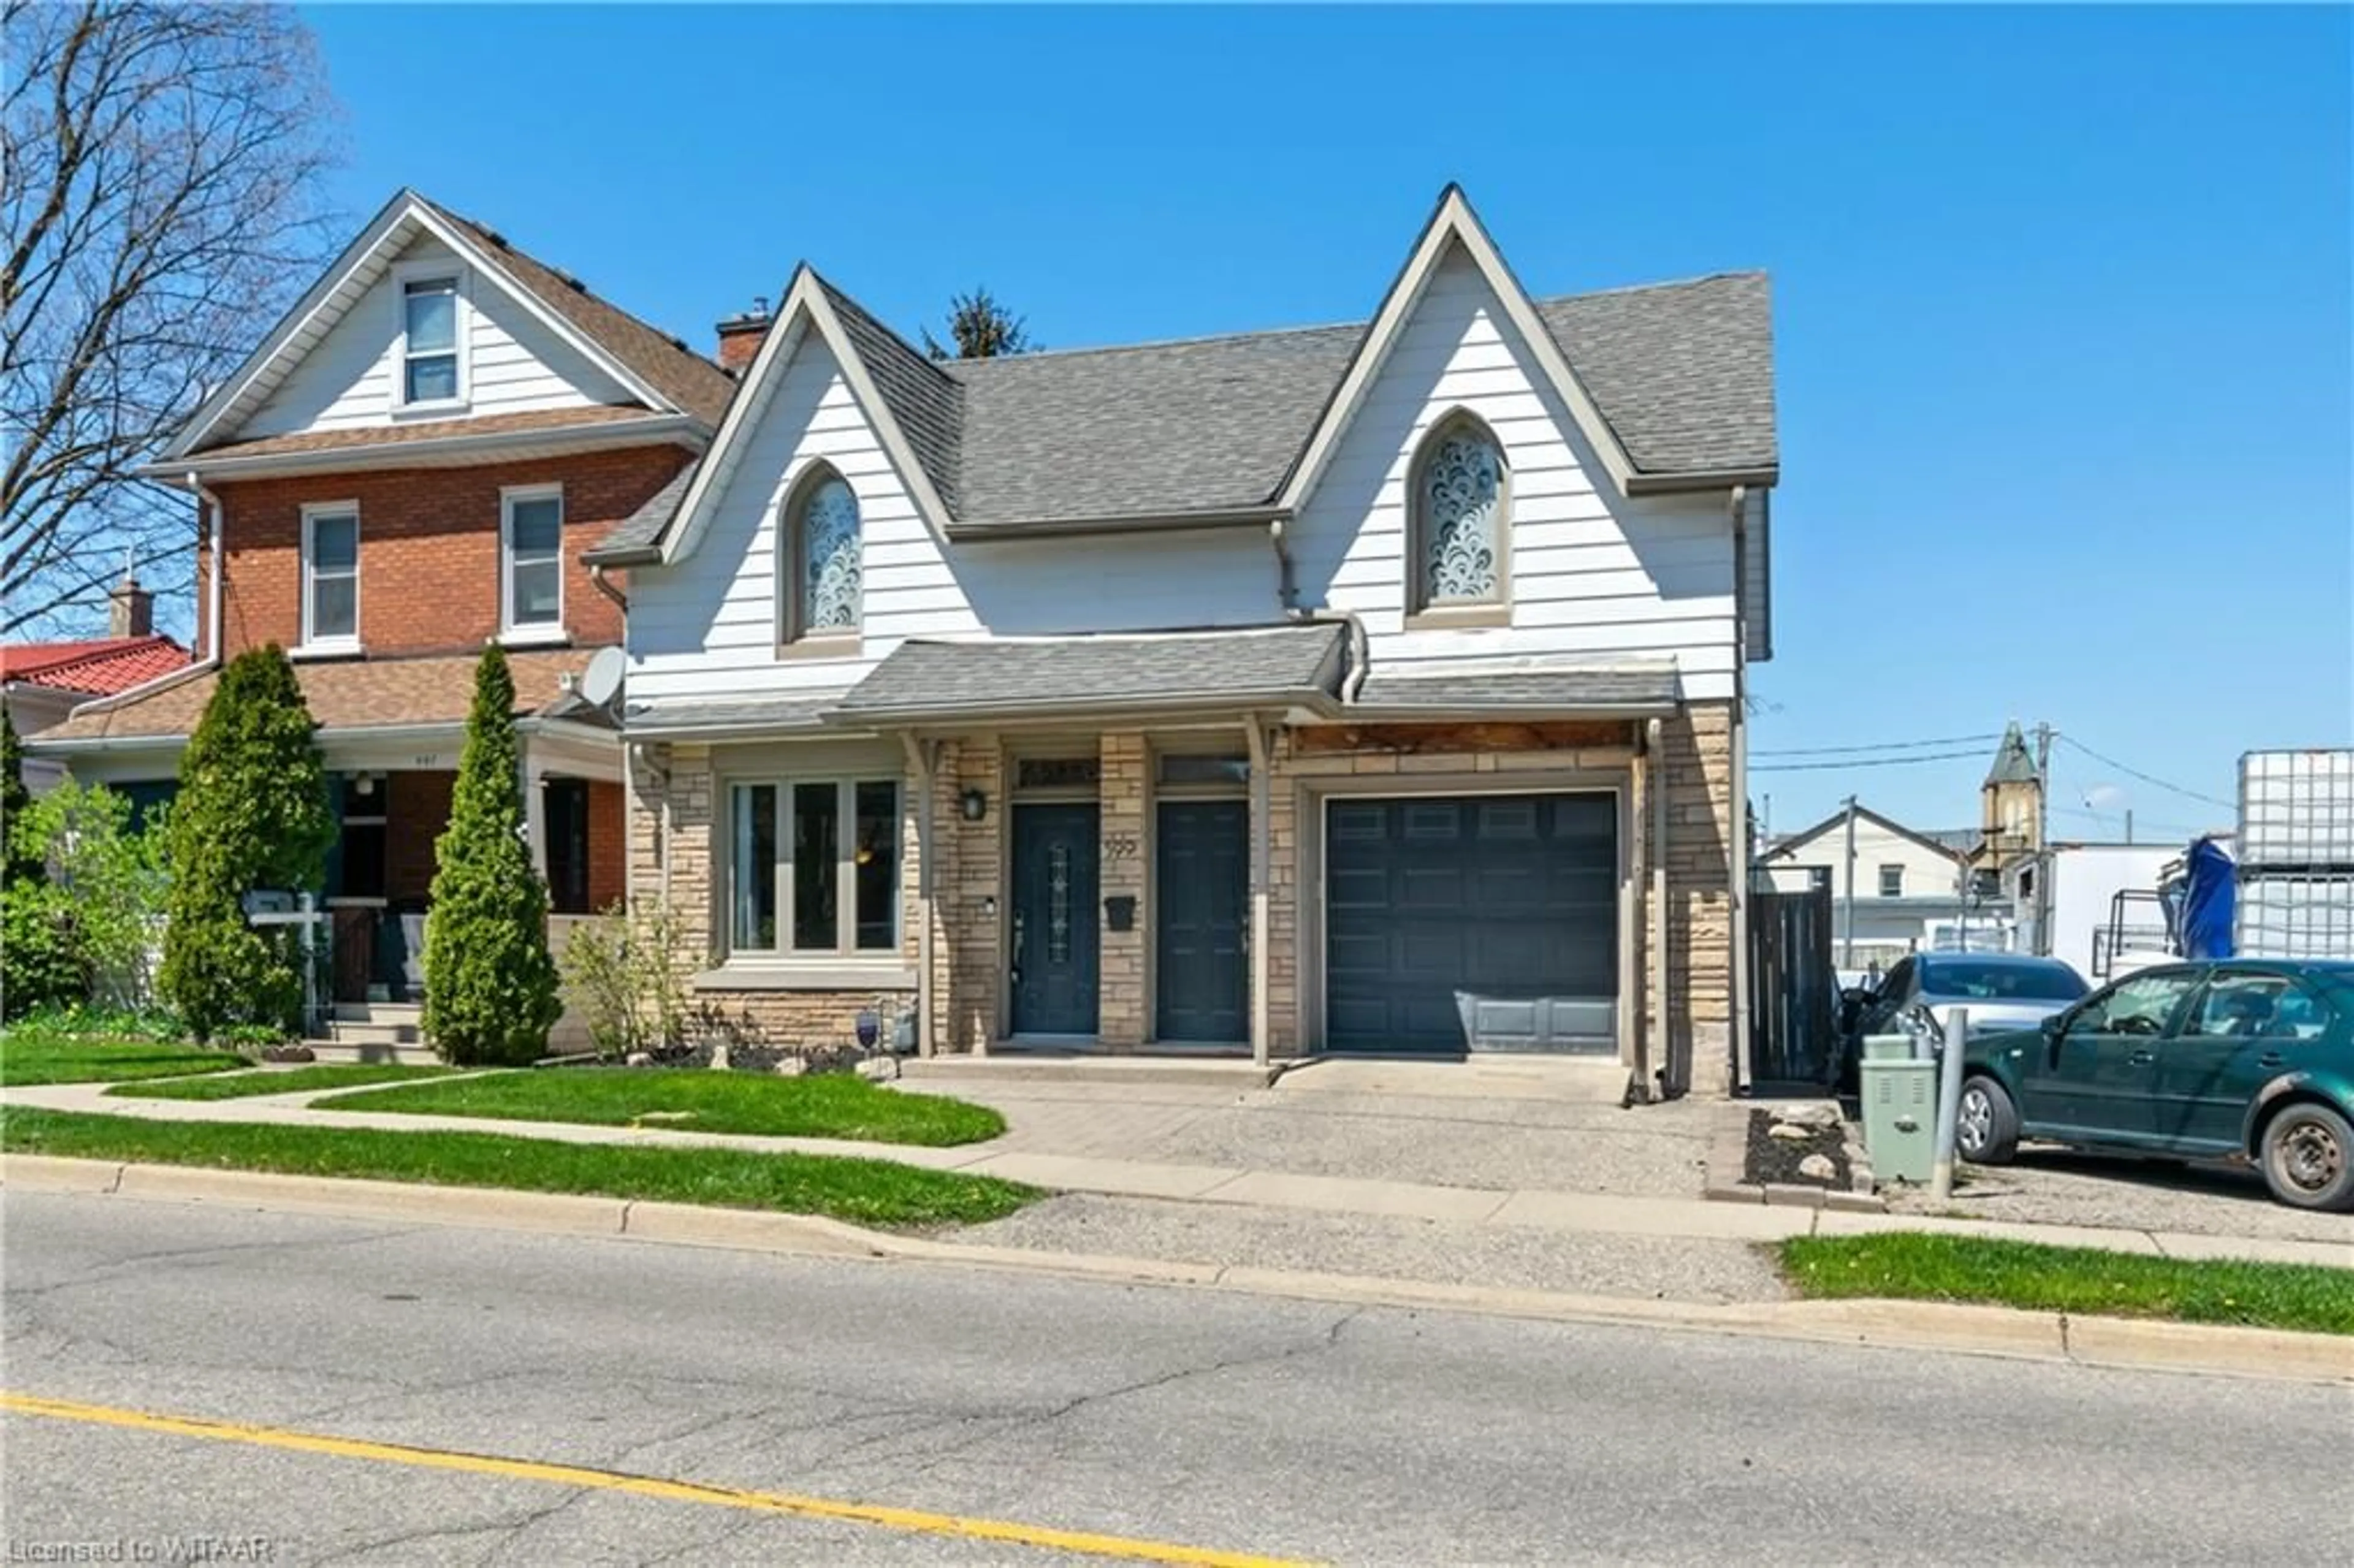 Frontside or backside of a home for 599 Peel St, Woodstock Ontario N4S 1K6